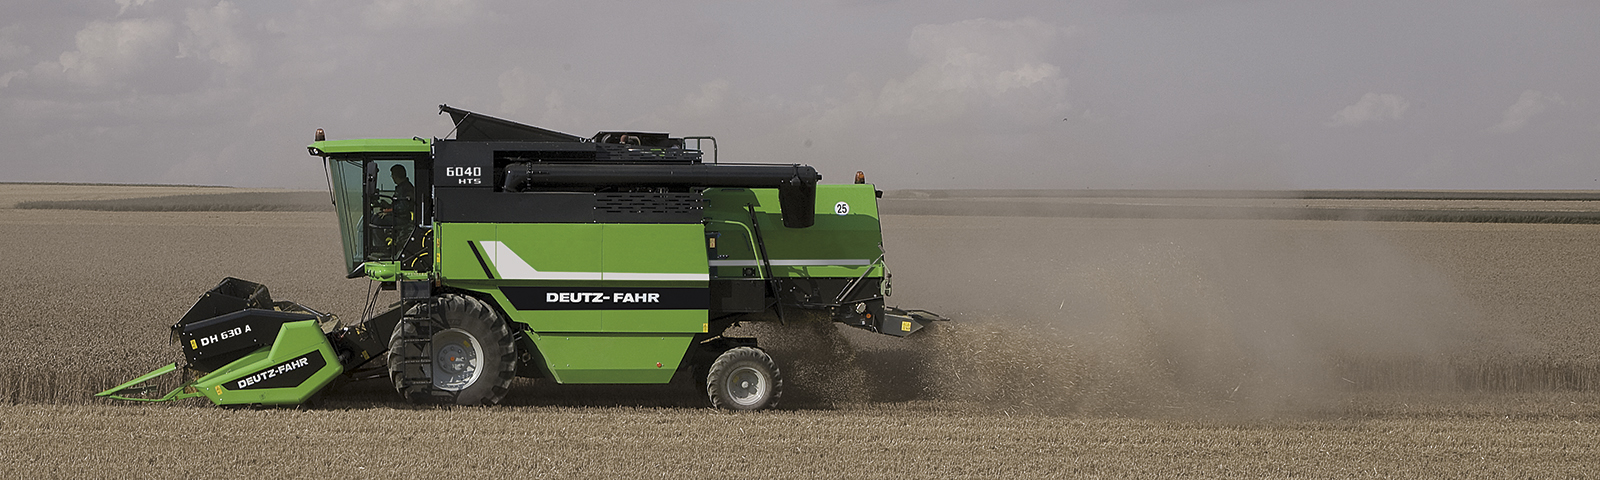 Combine harvester Deutz Fahr series 6040 HTS